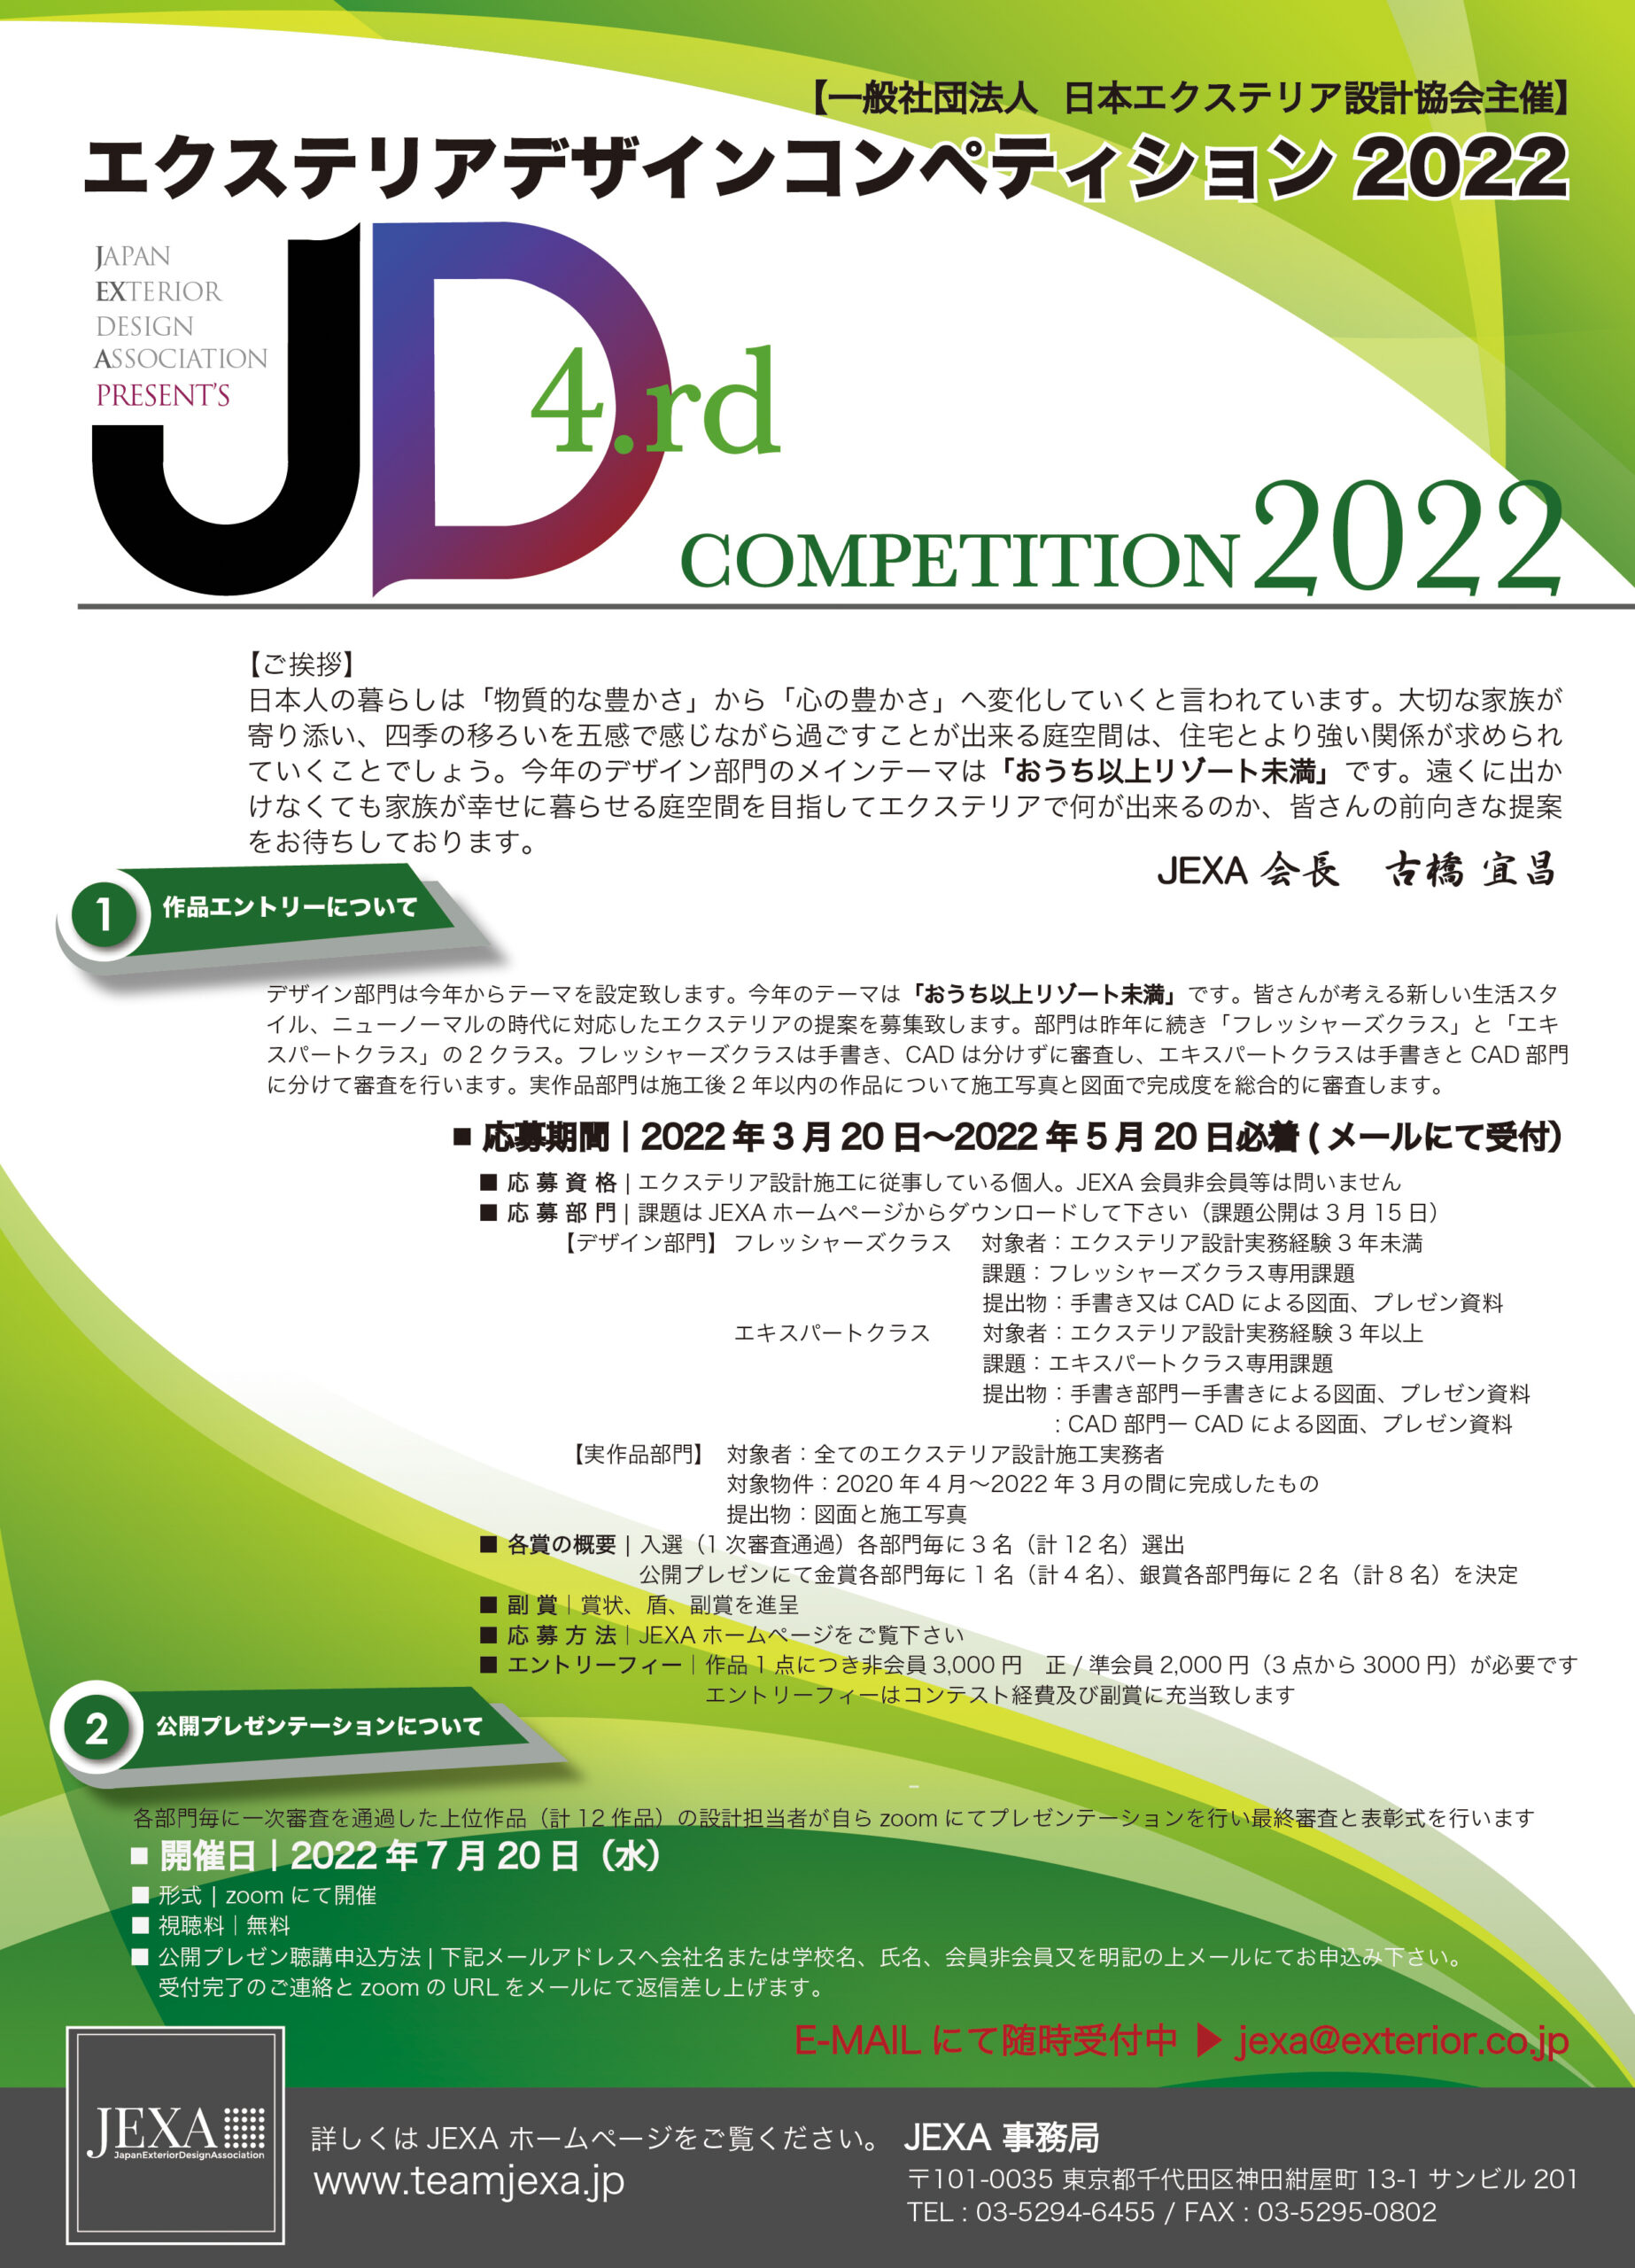 JEXA EXTERIOR DESIGN  COMPETITION 2022